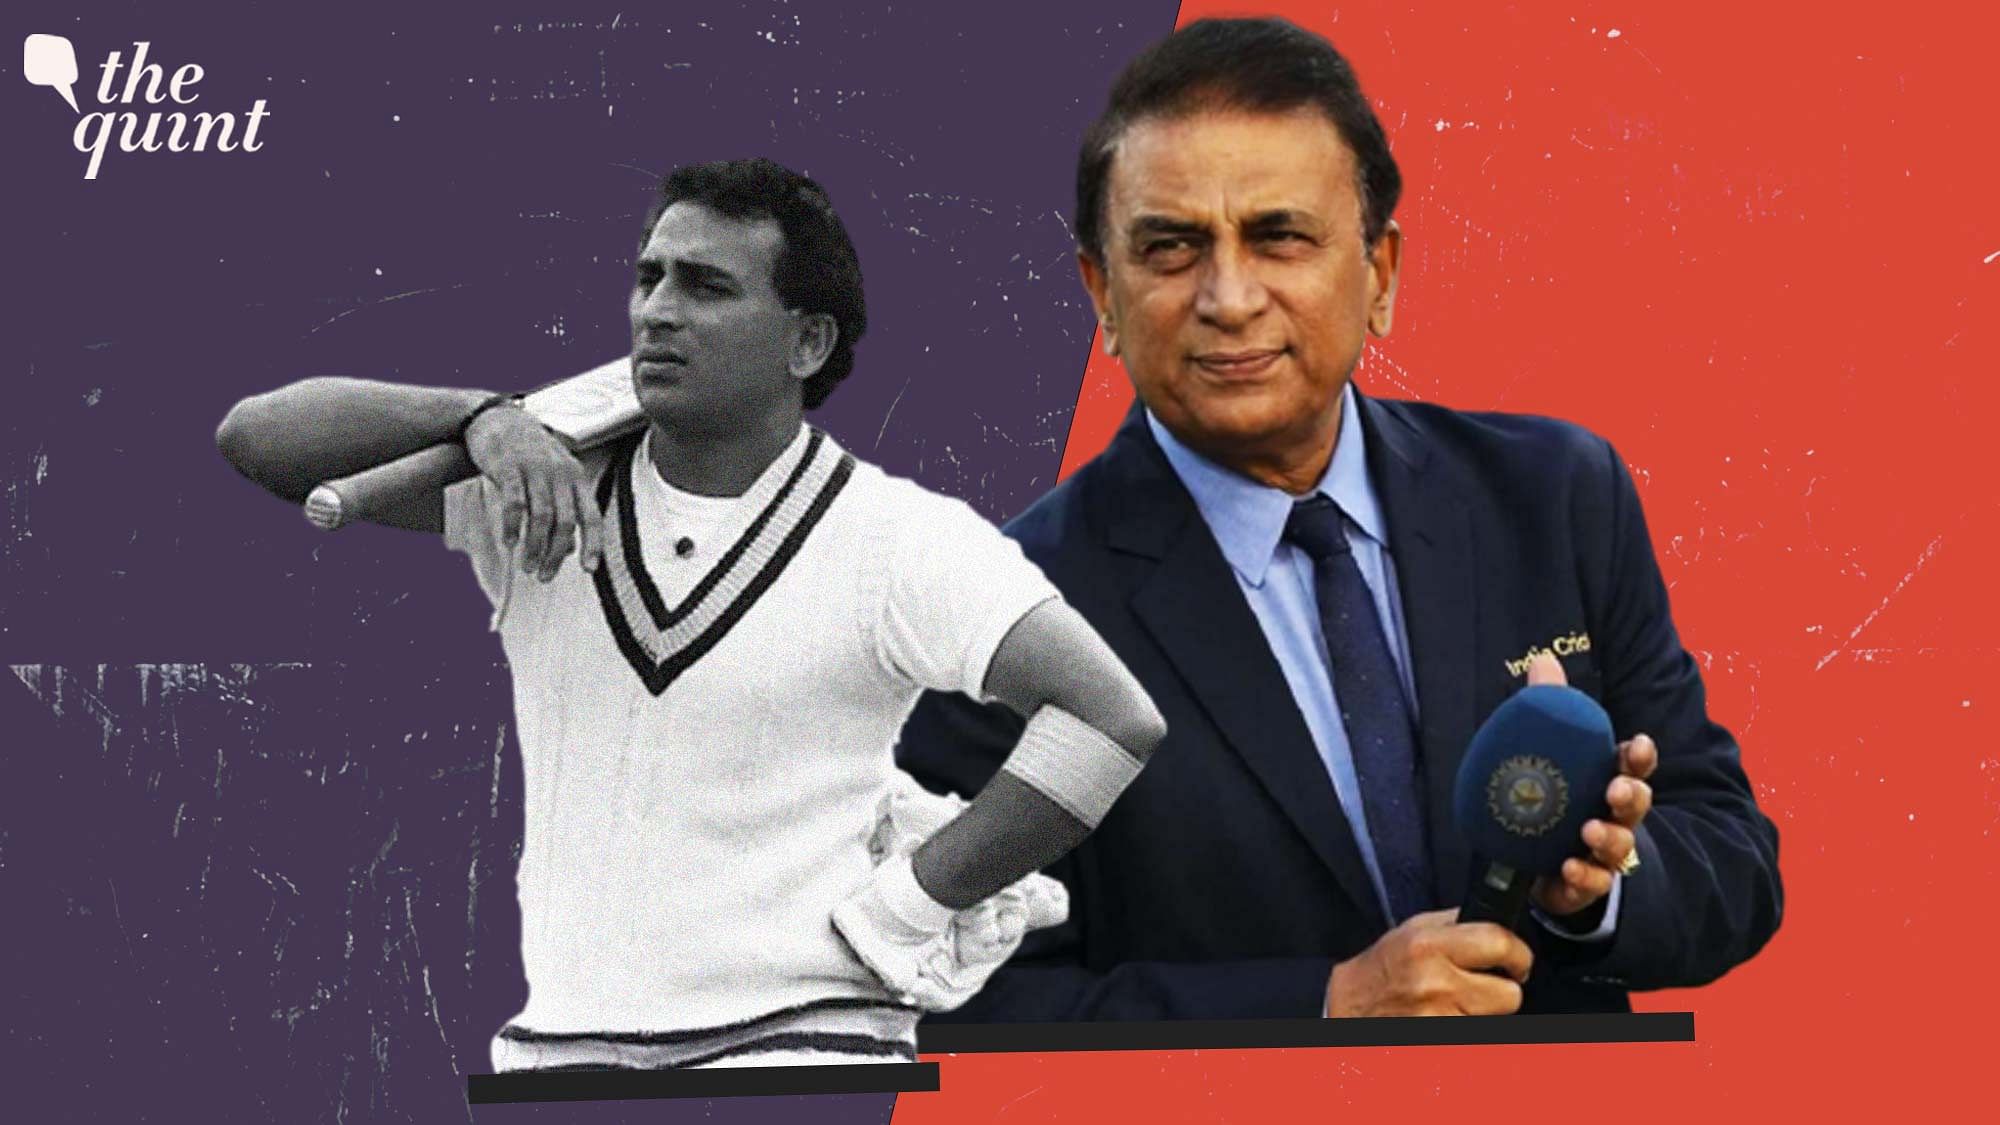 <div class="paragraphs"><p>There were cricketing greats like Vijay Merchant, Vijay Manjrekar, and Vinoo Mankad that preceded Sunil Gavaskar. But Gavaskar remains the first cricket legend.</p></div>